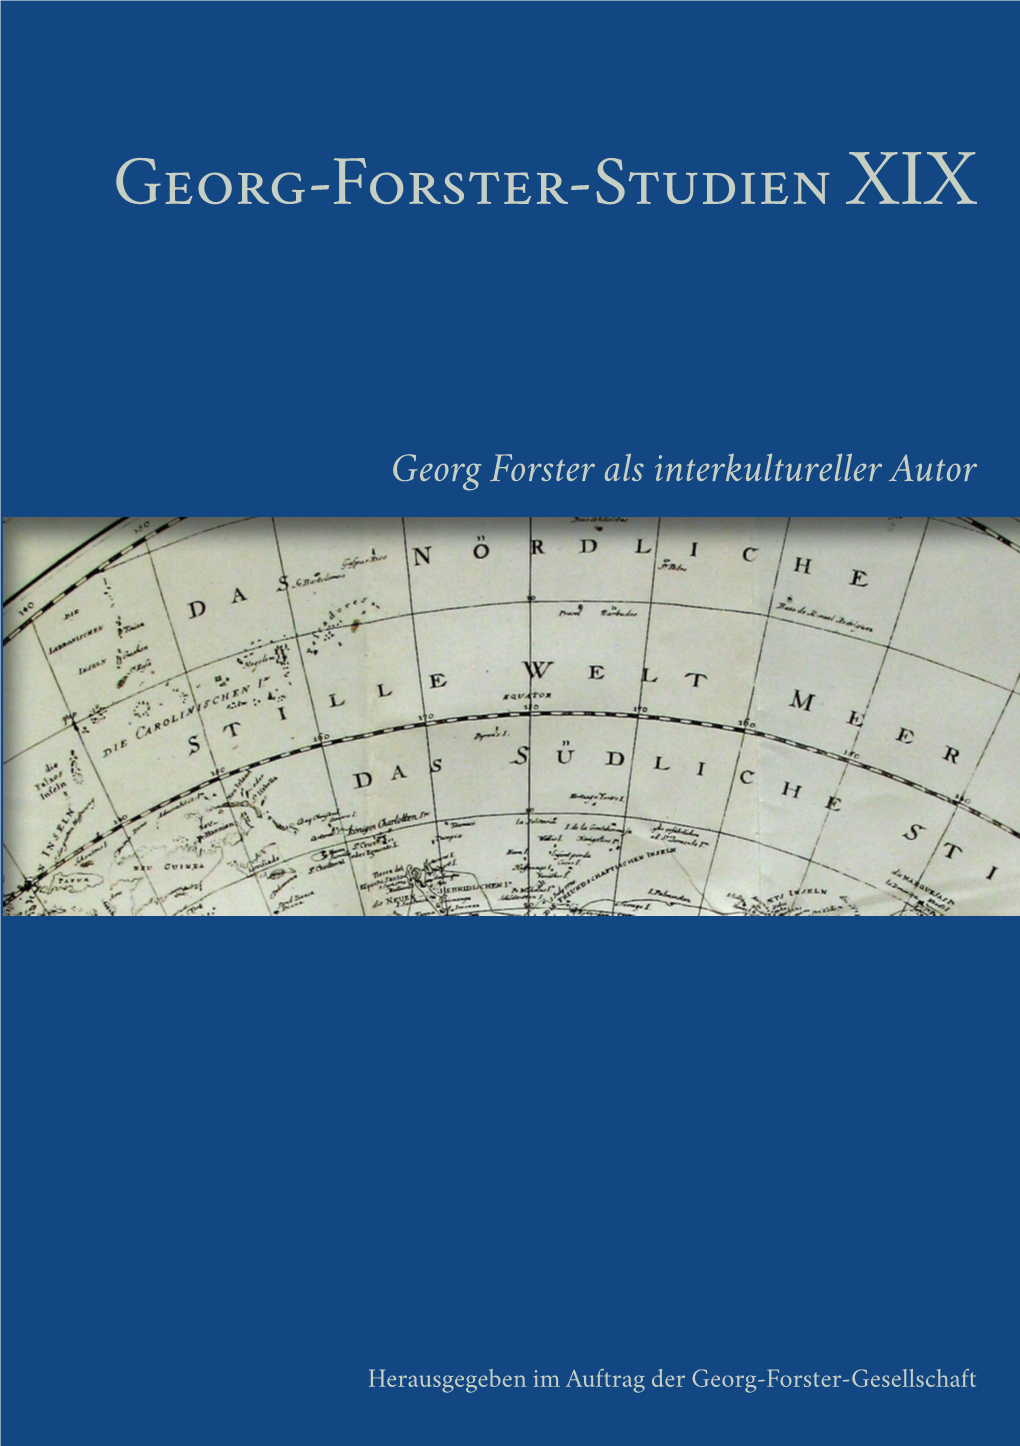 Georg-Forster-Studien XIX Utor A